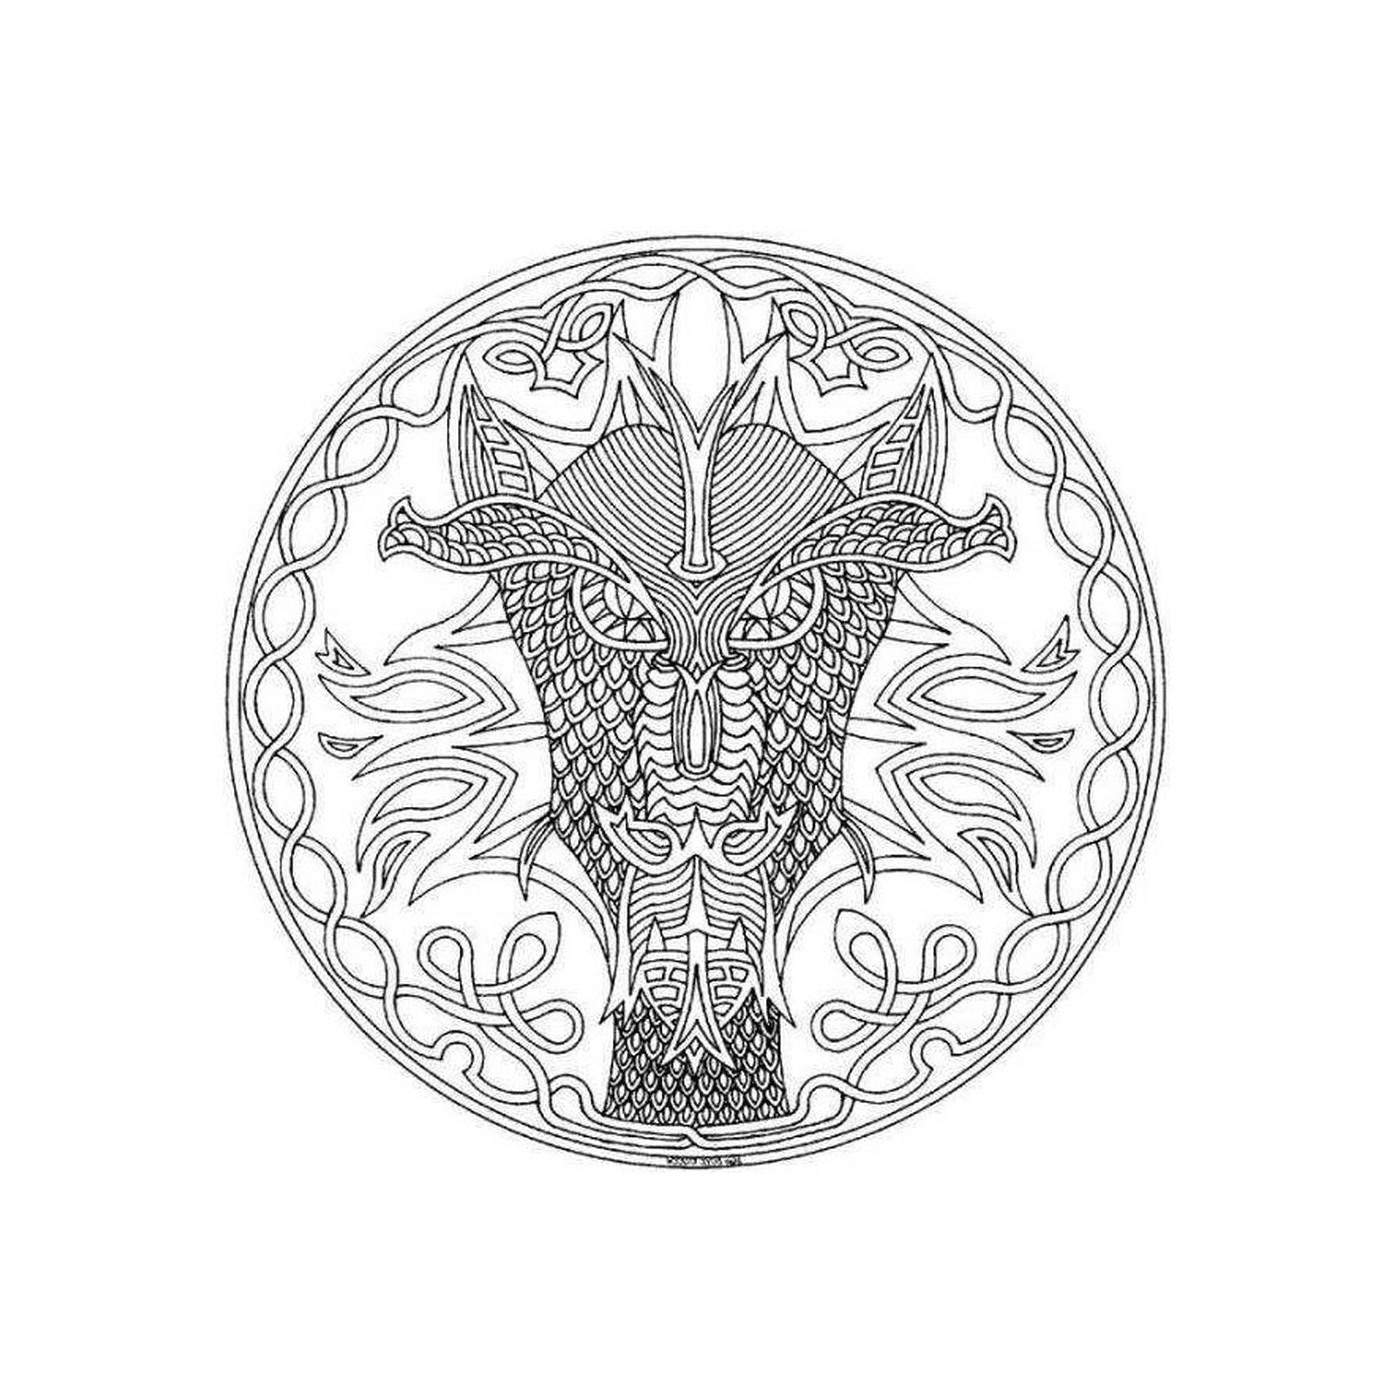   Mandala de dragon 